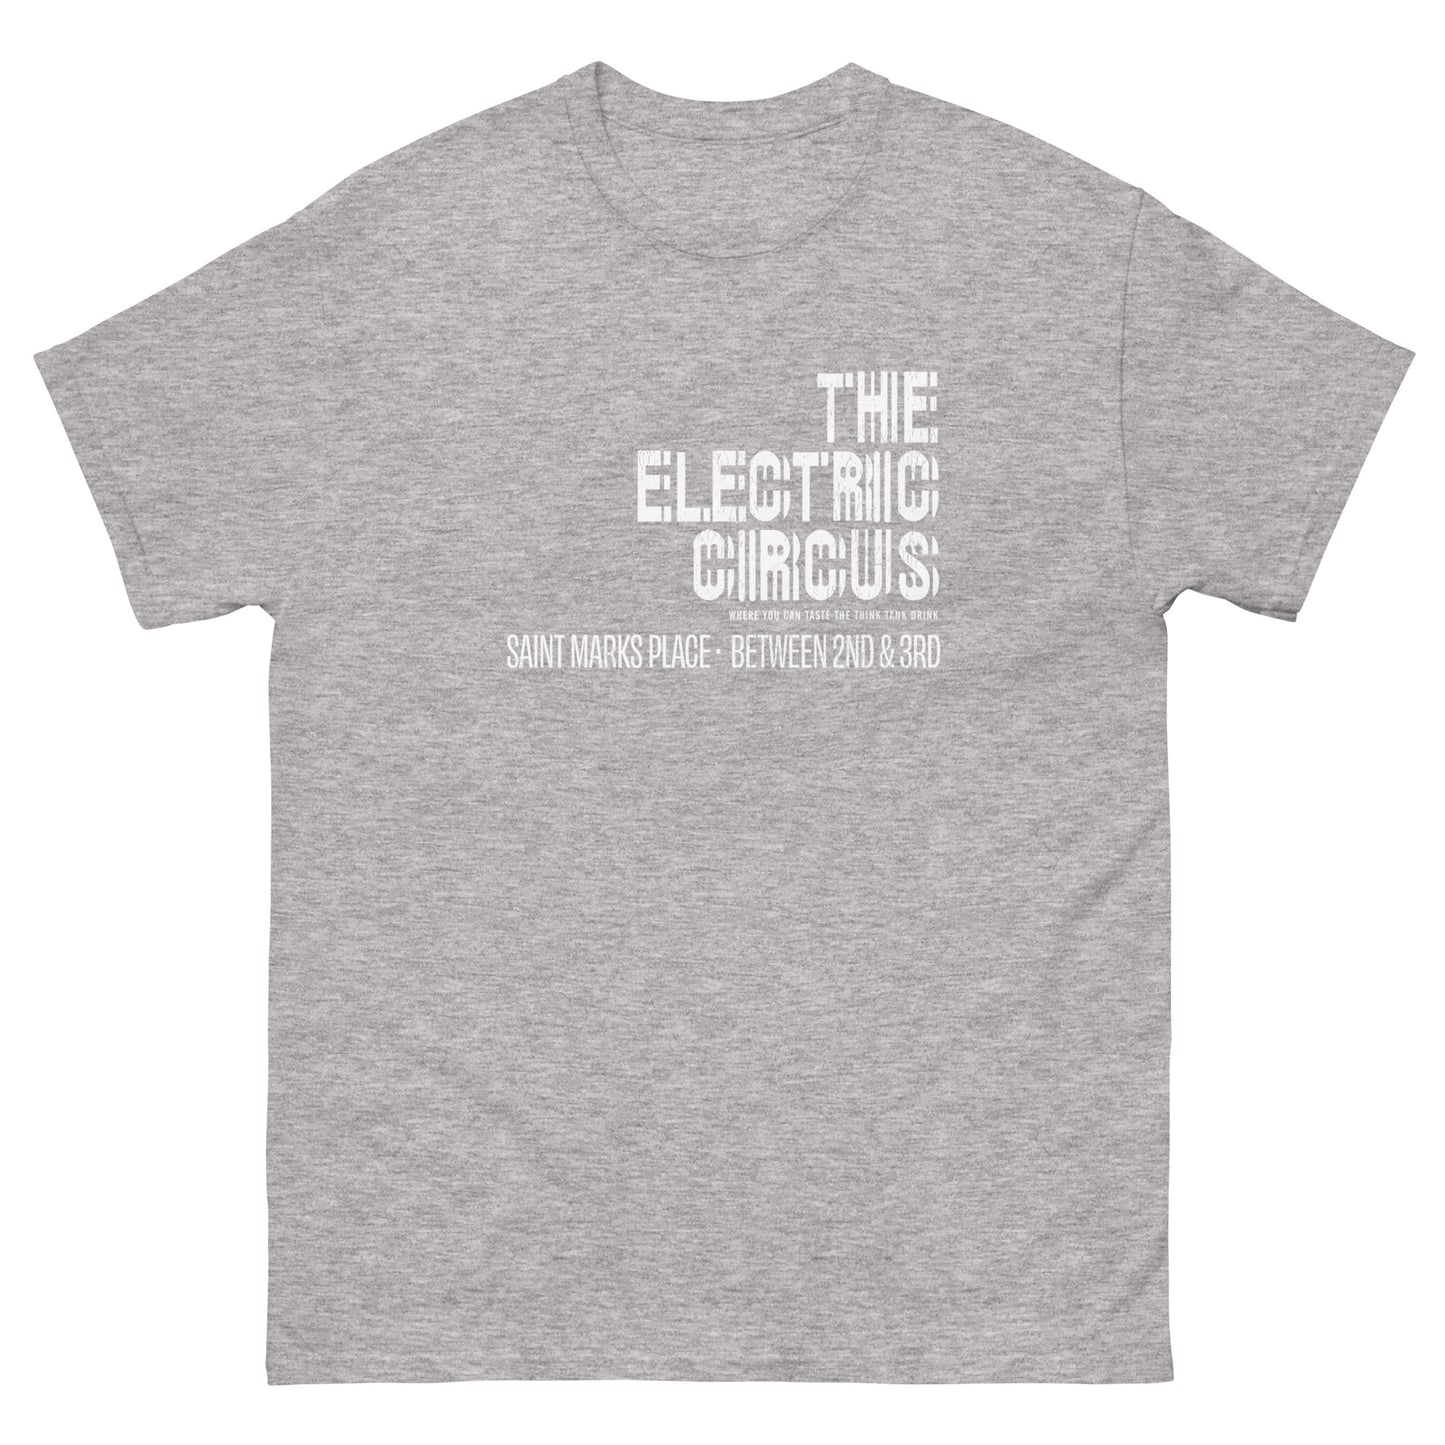 The Electric Circus Standard T-Shirt - Standard T-Shirt